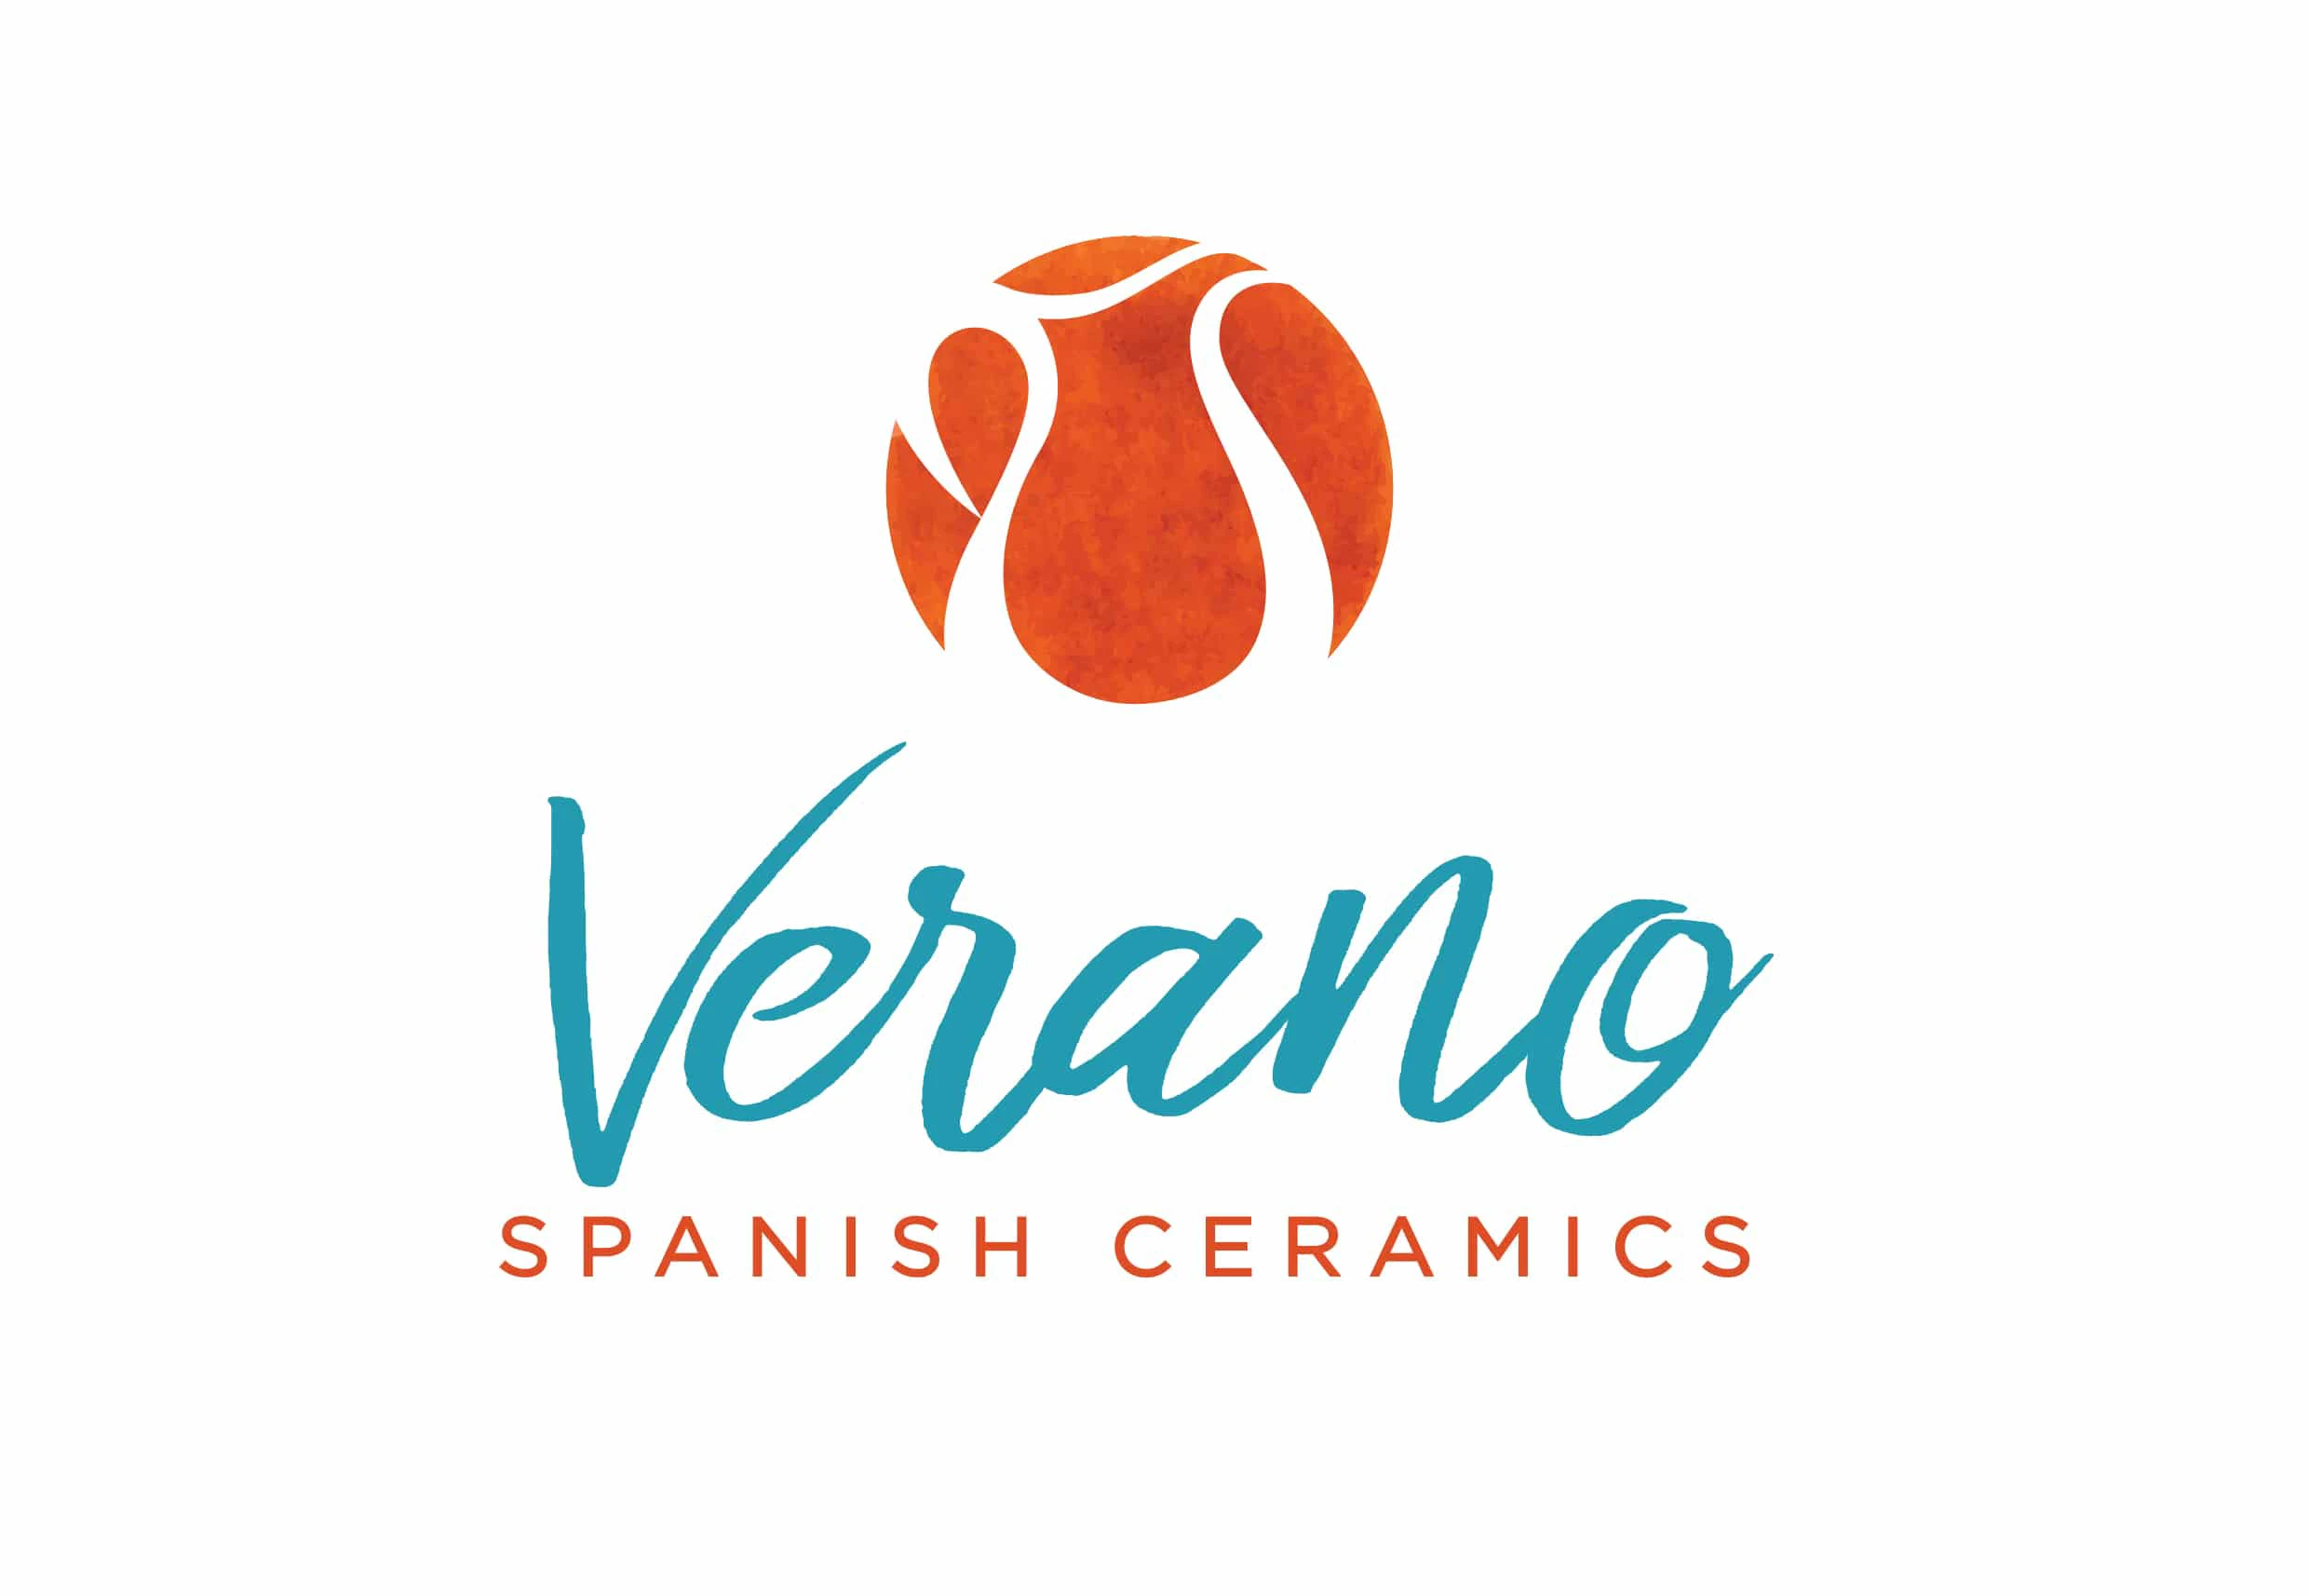 Verano Ceramics Free Shipping Code